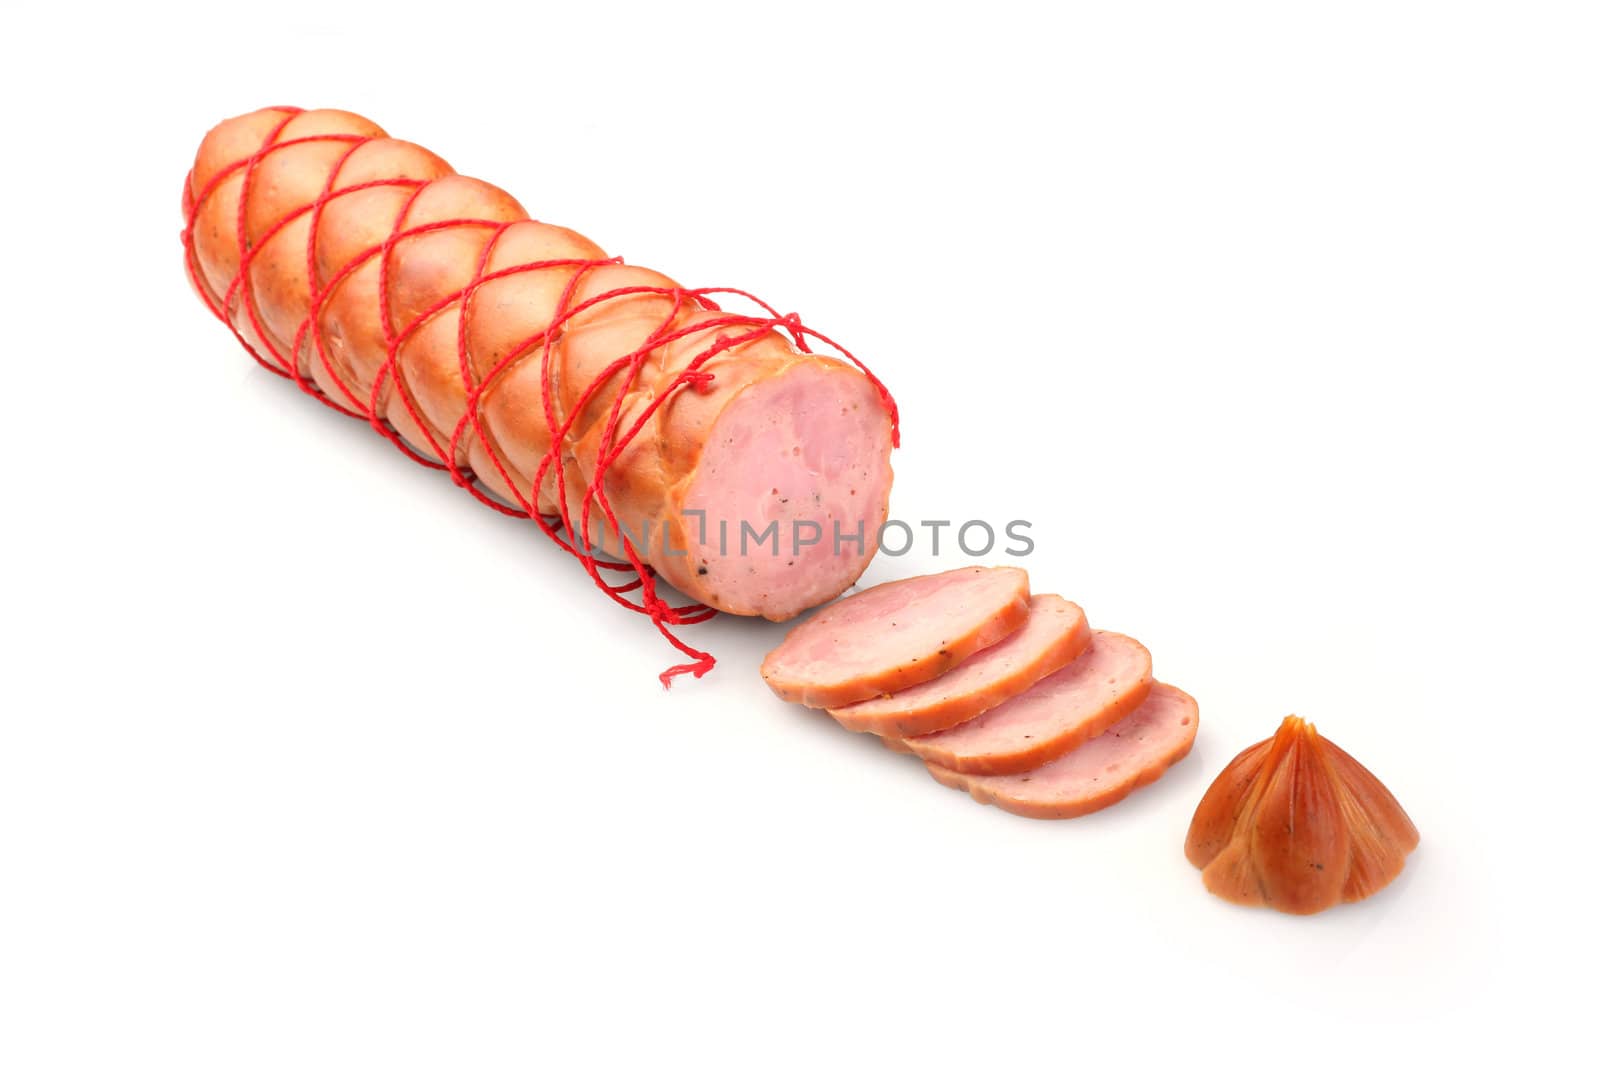 Sliced sausage on white background